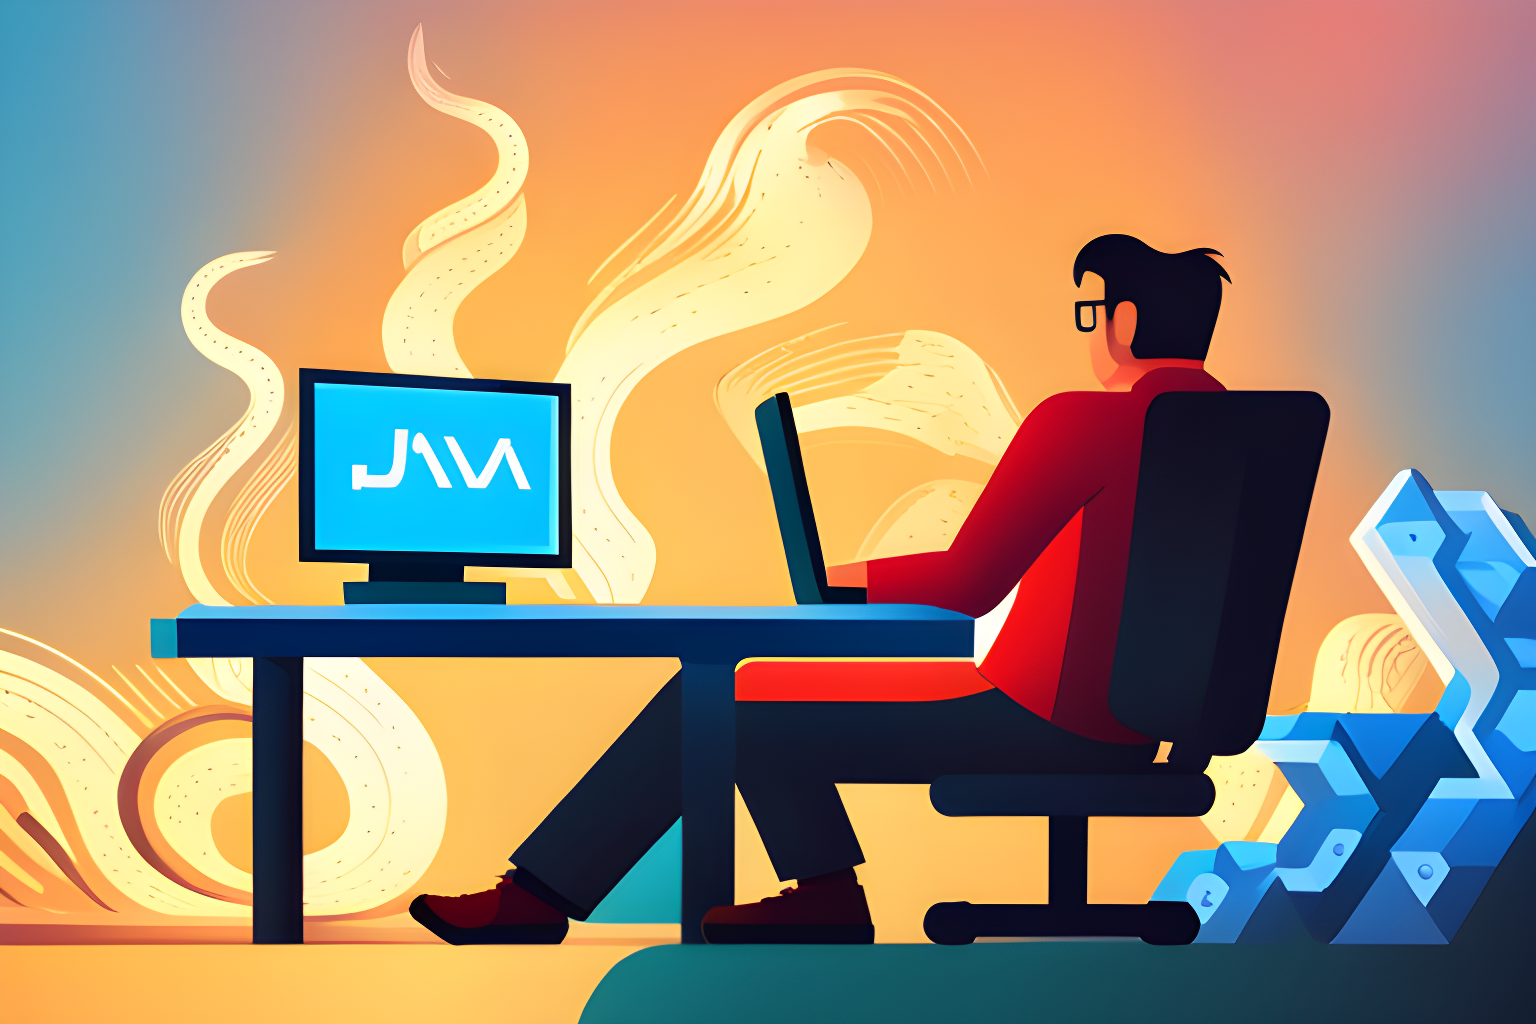 hire dedicated java developer